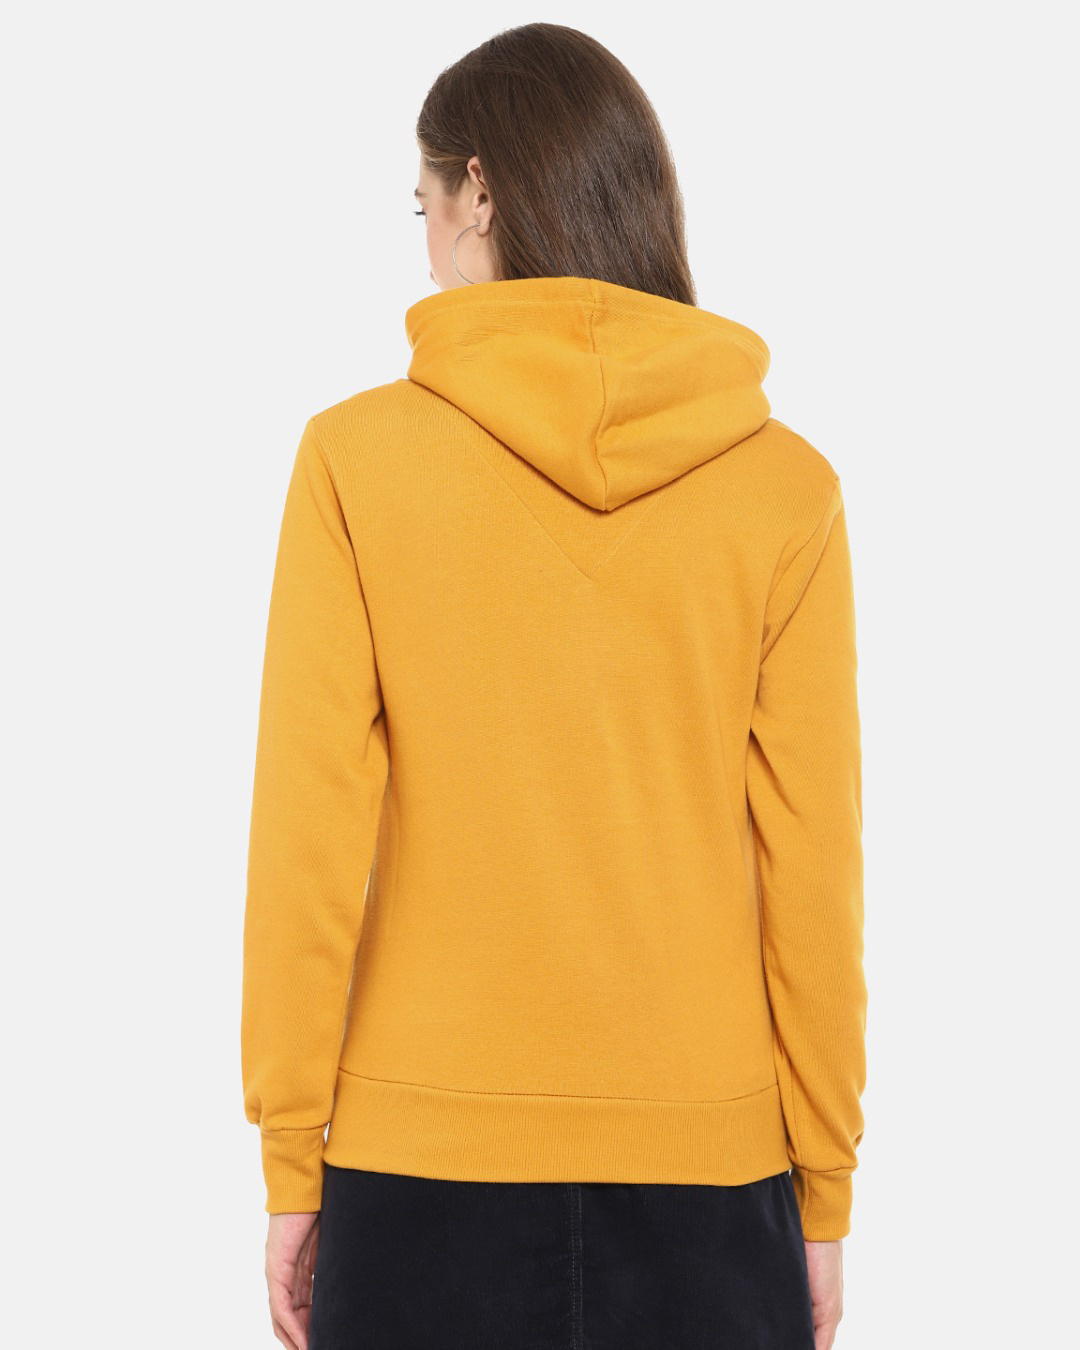 Shop Women's Yellow Solid Stylish Casual Hooded Sweatshirt-Back